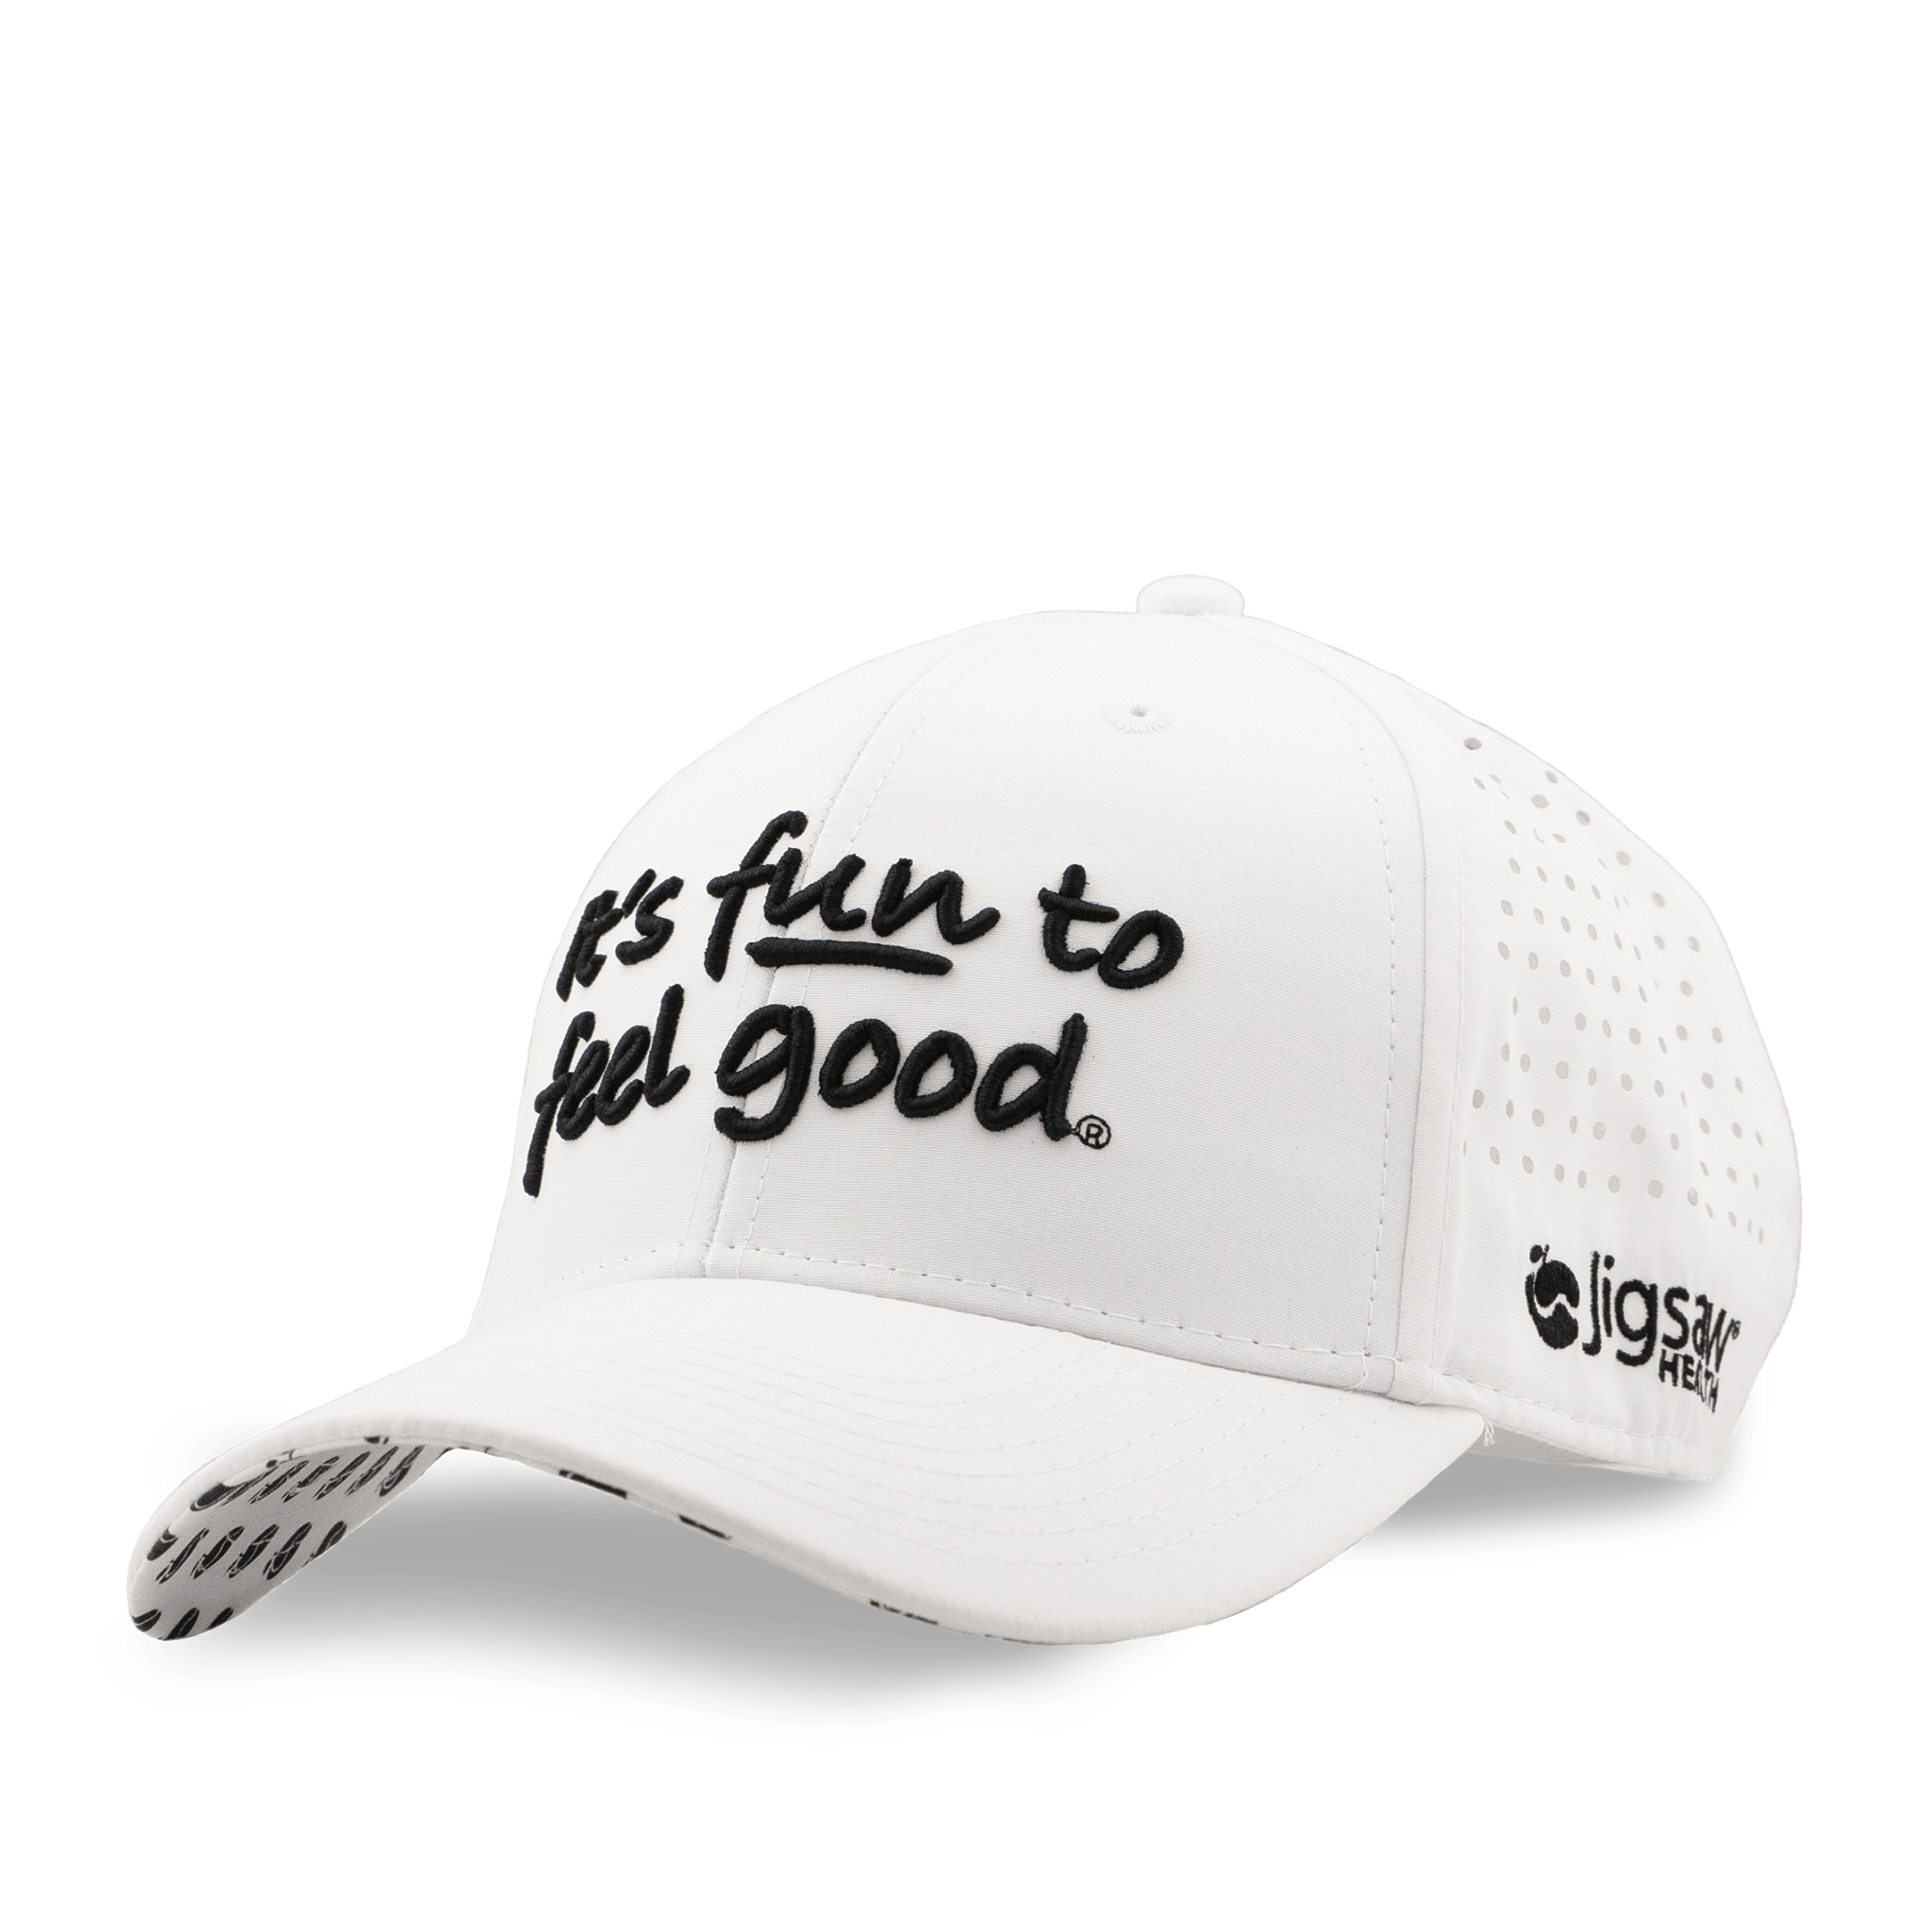 Sport Hat - It's Fun to Feel Good White